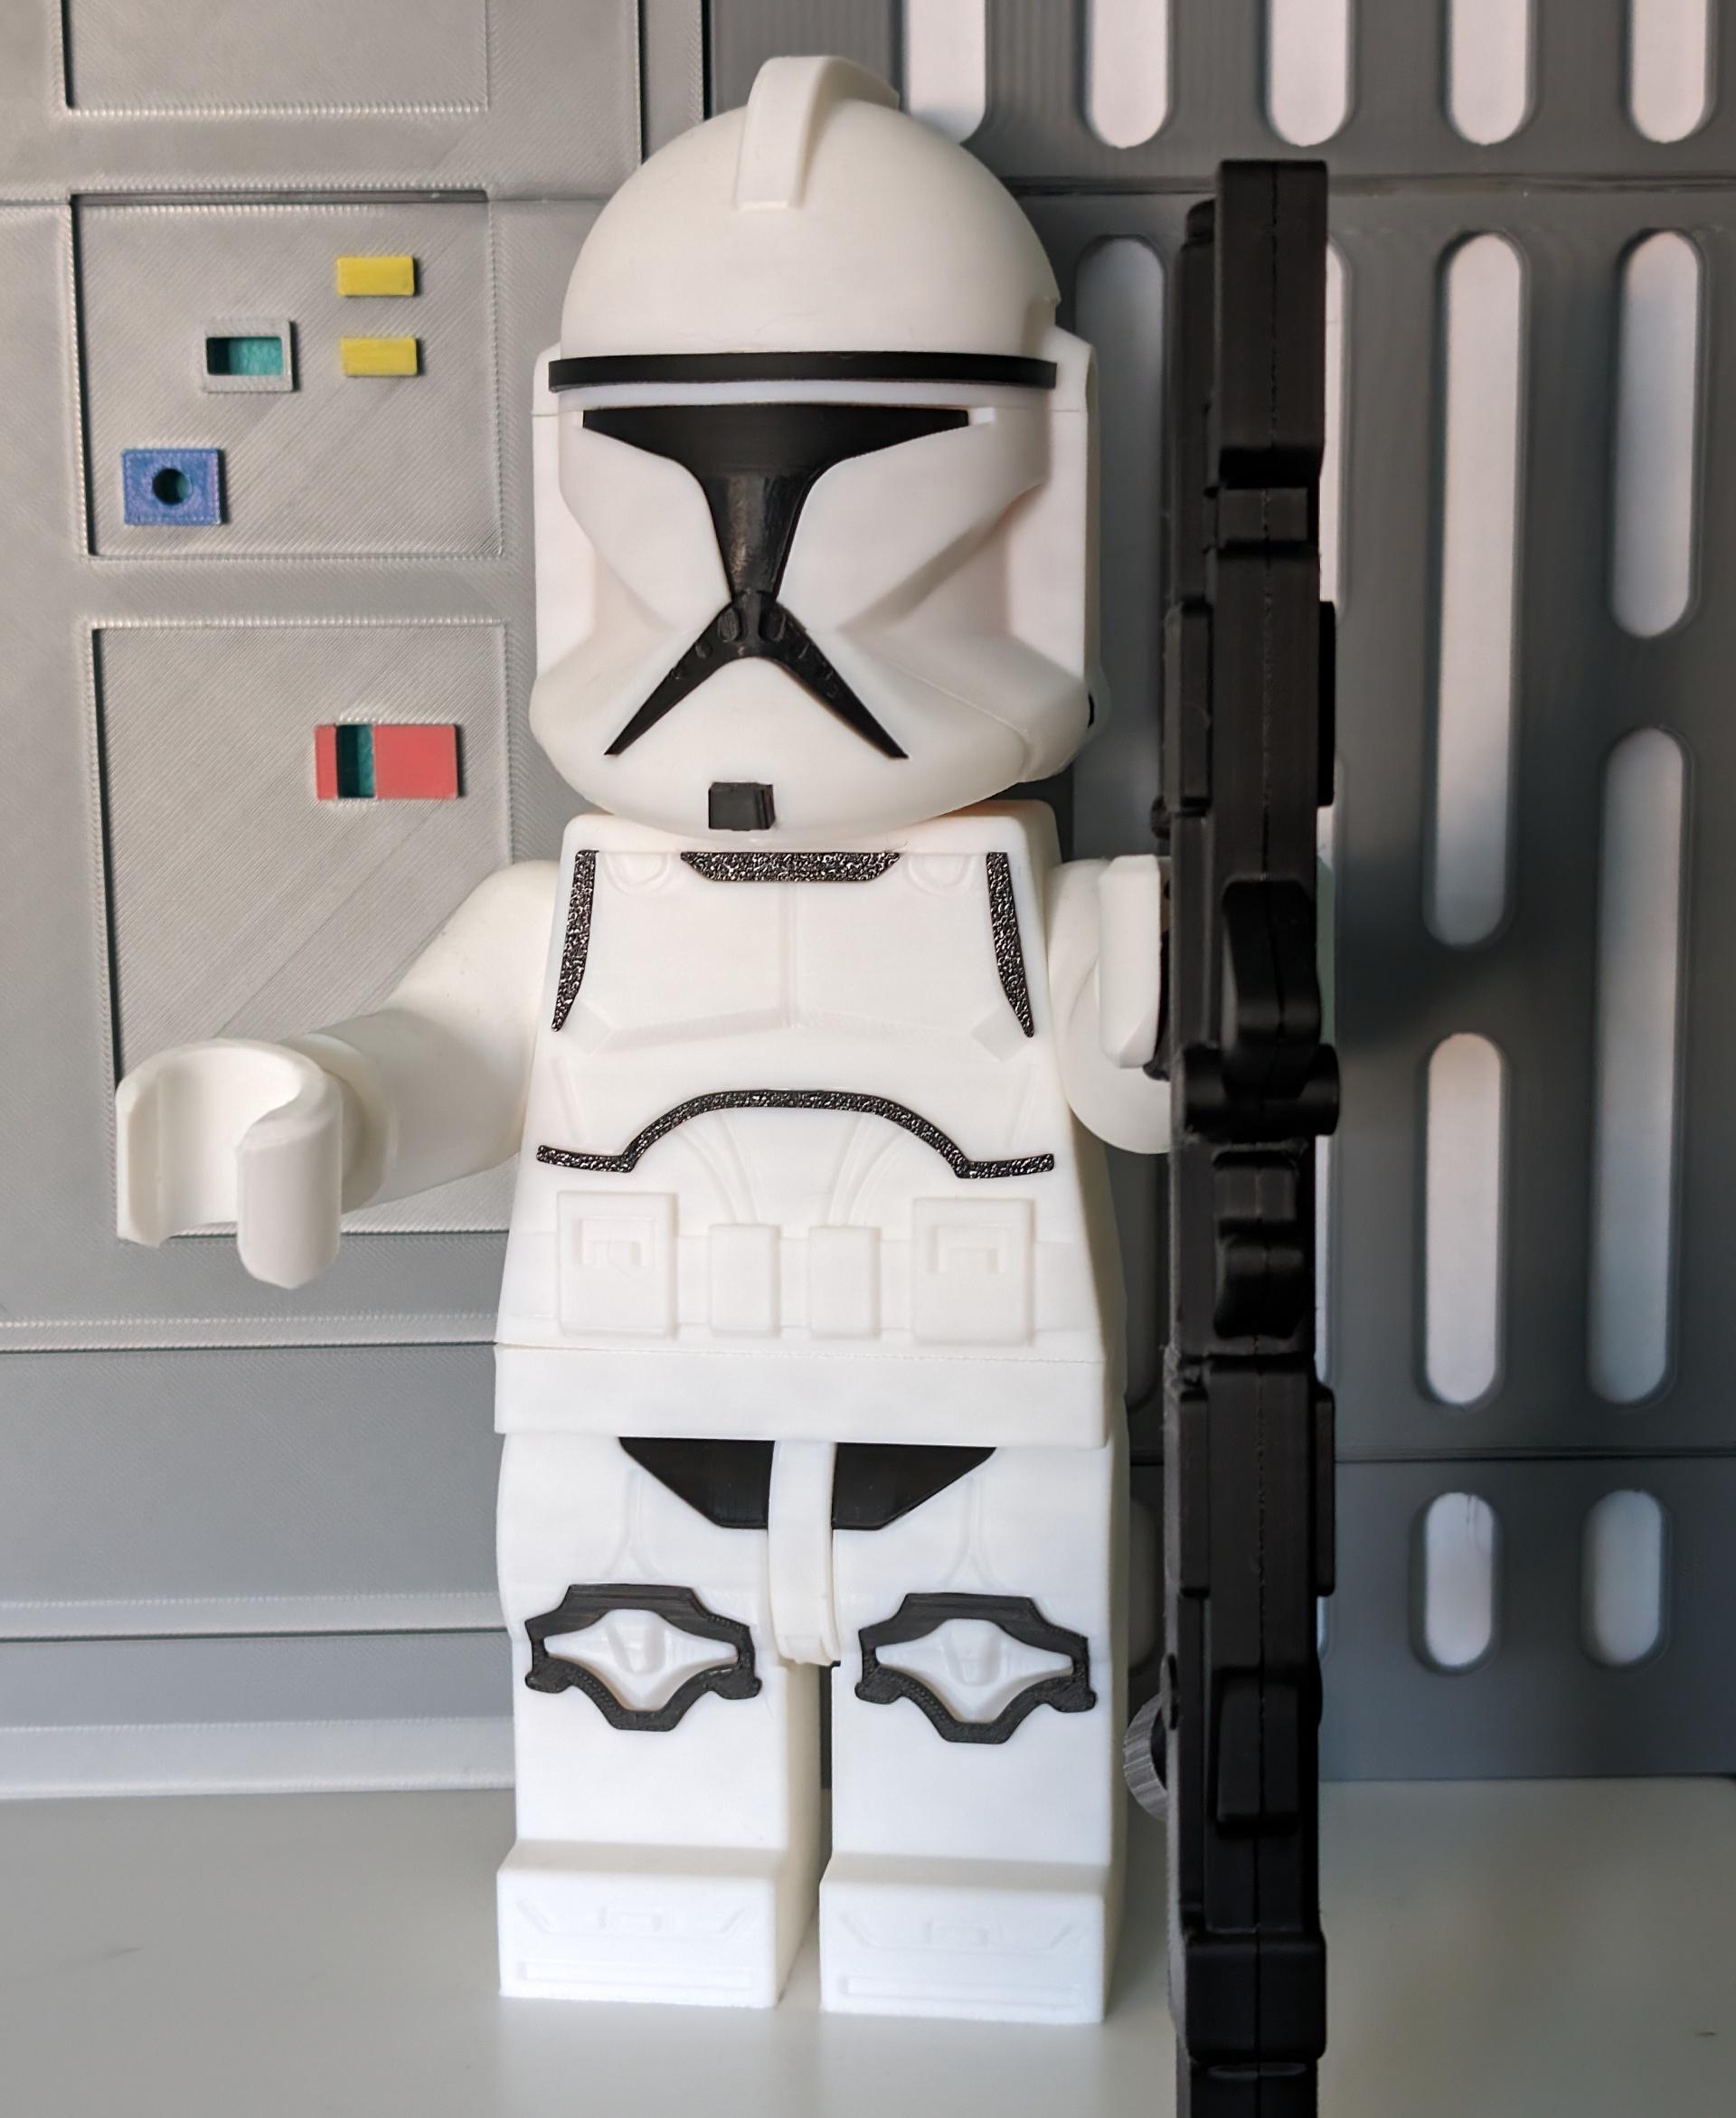 Clone Trooper - Phase I (6:1 LEGO-inspired brick figure, NO MMU/AMS, NO supports, NO glue) - Pew Pew Pew Pewwwww! - 3d model